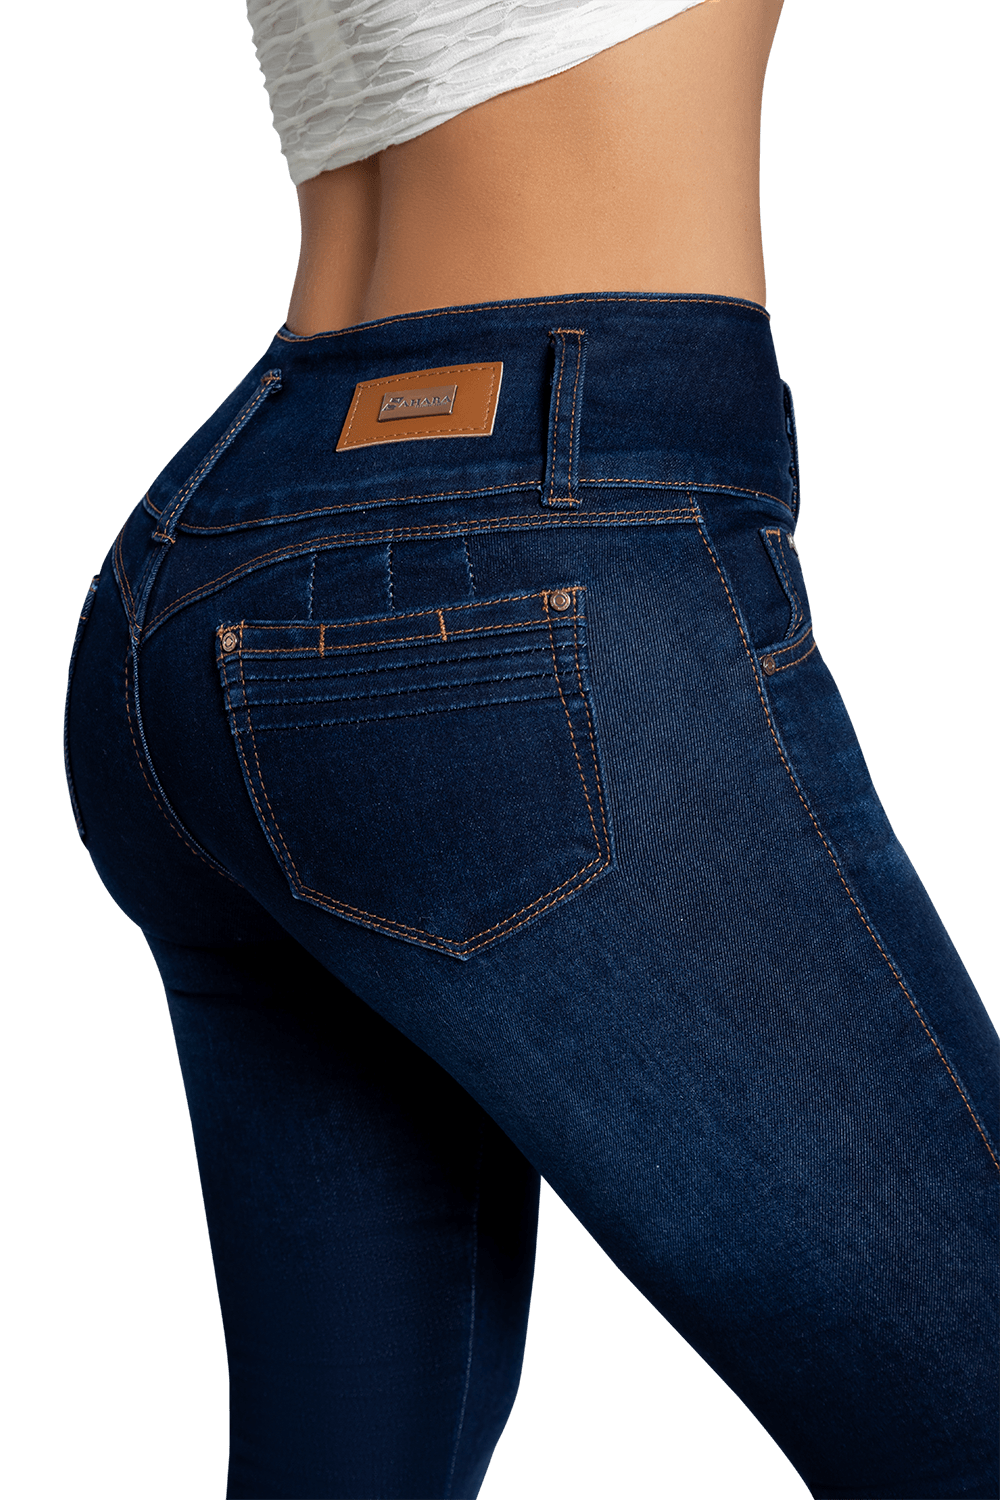 Top Push Up Jeans - Fainne